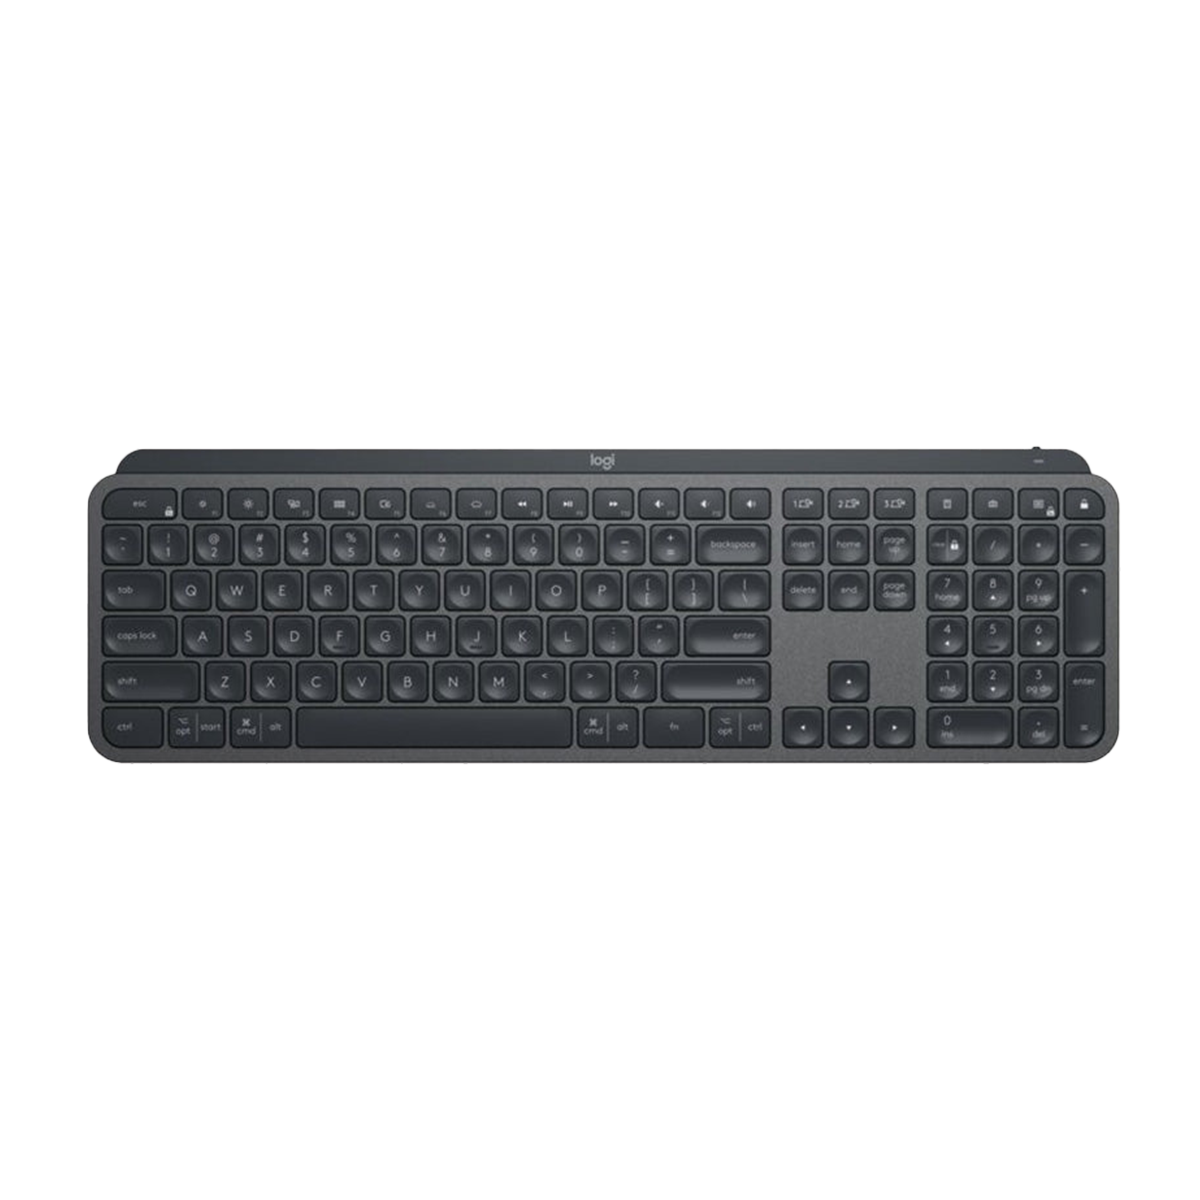 MX KEYS High Performance Wireless Keyboard (US)